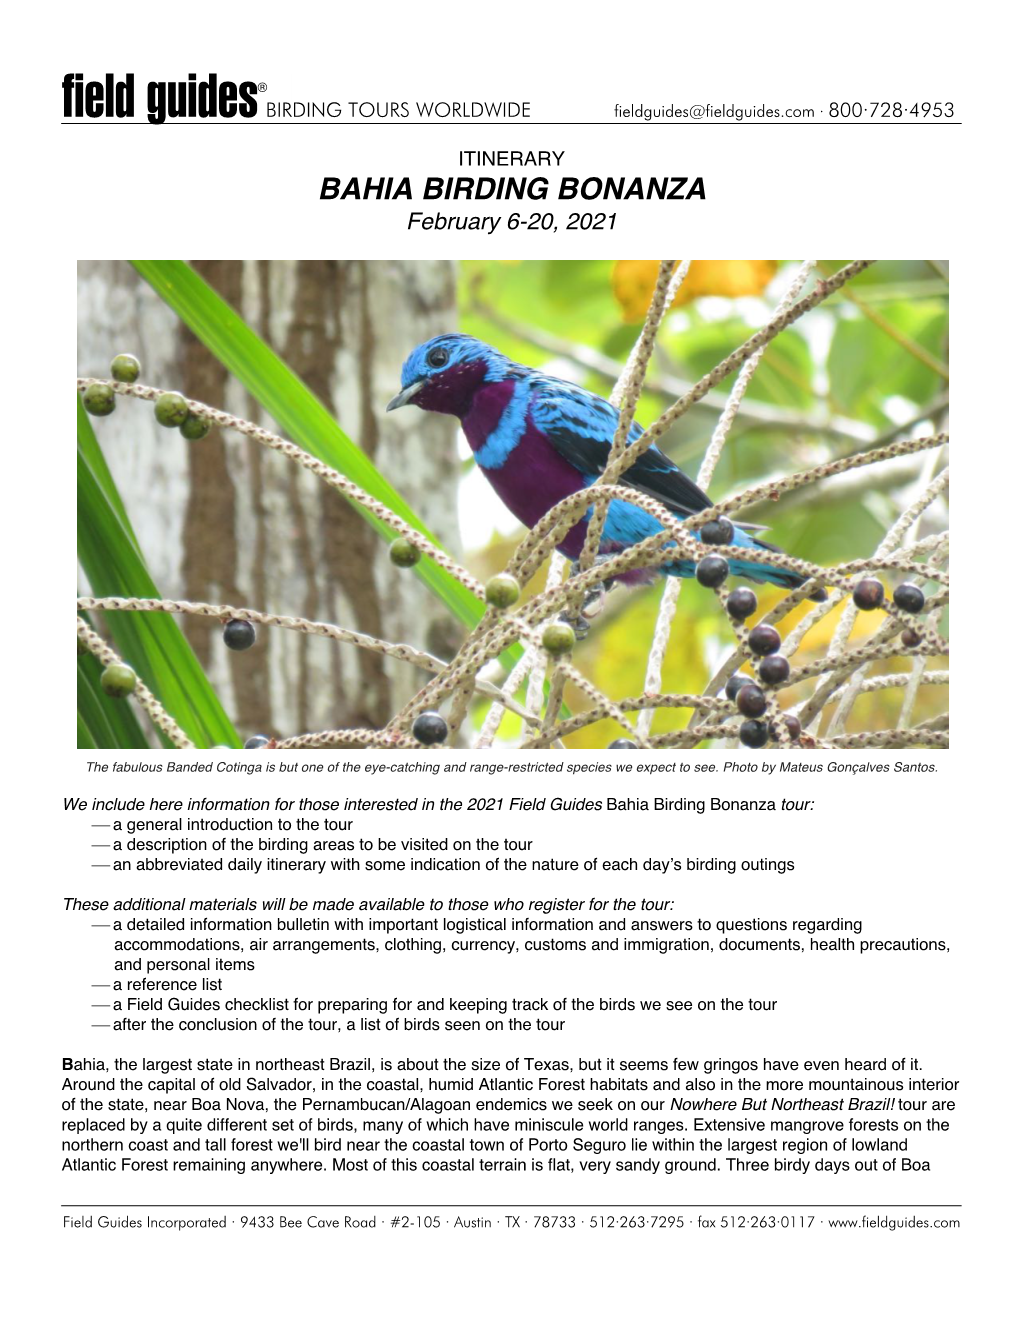 BAHIA BIRDING BONANZA February 6-20, 2021